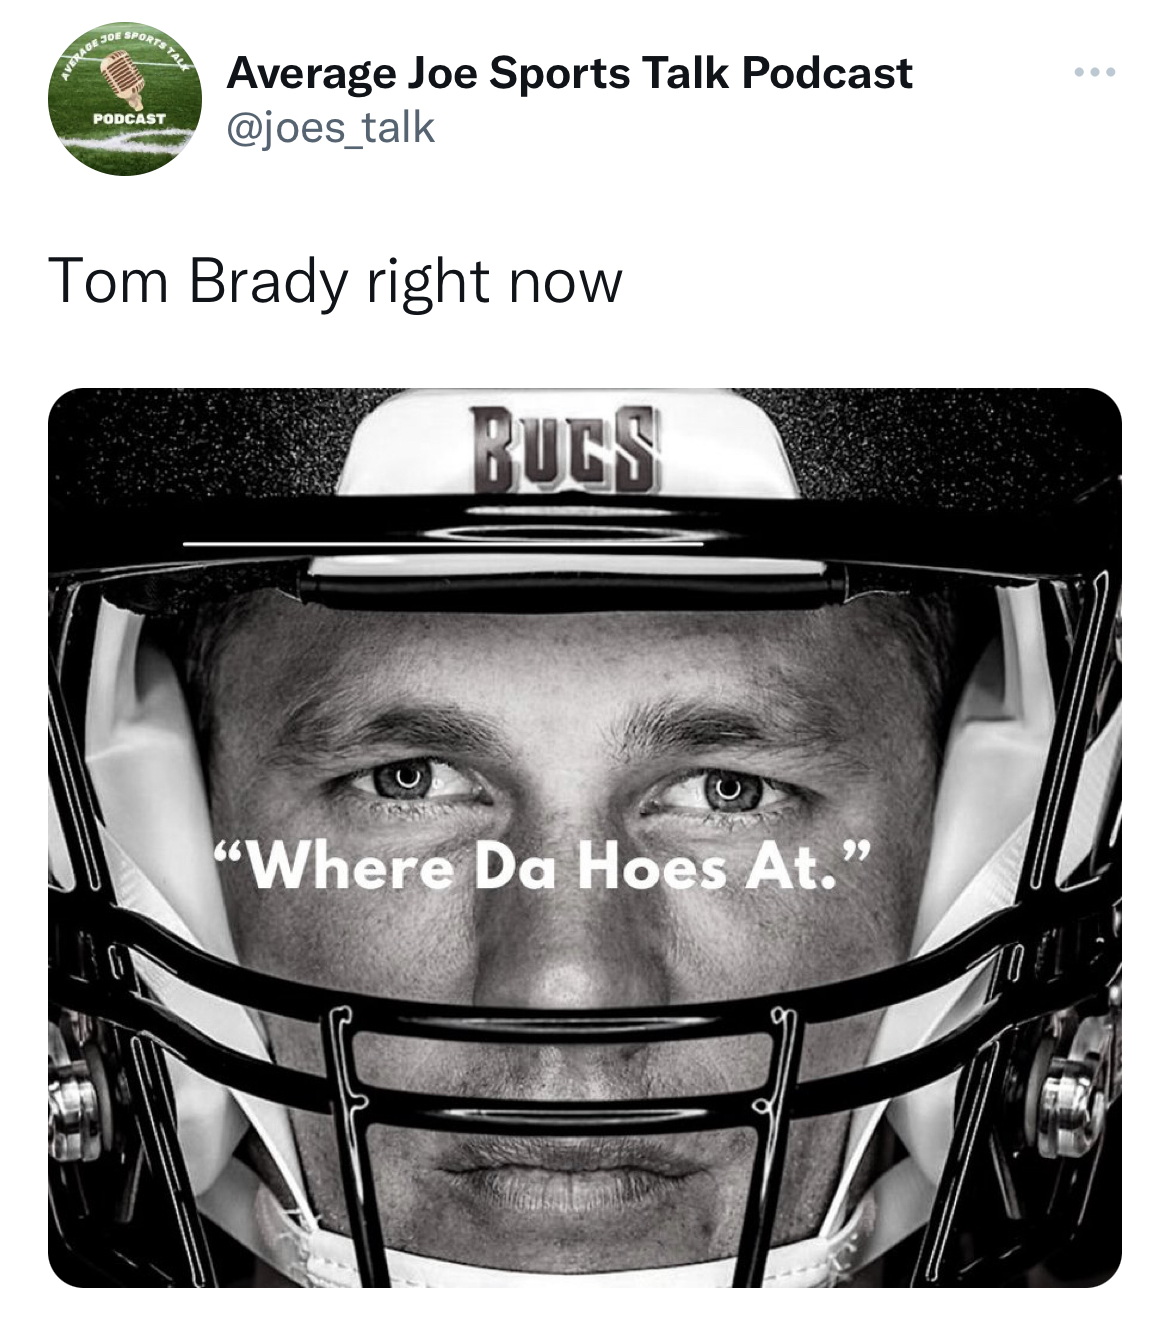 celeb roasts of the week - tom brady postseason wins - Podca Average Joe Sports Talk Podcast Tom Brady right now Bugs "Where Da Hoes At." www